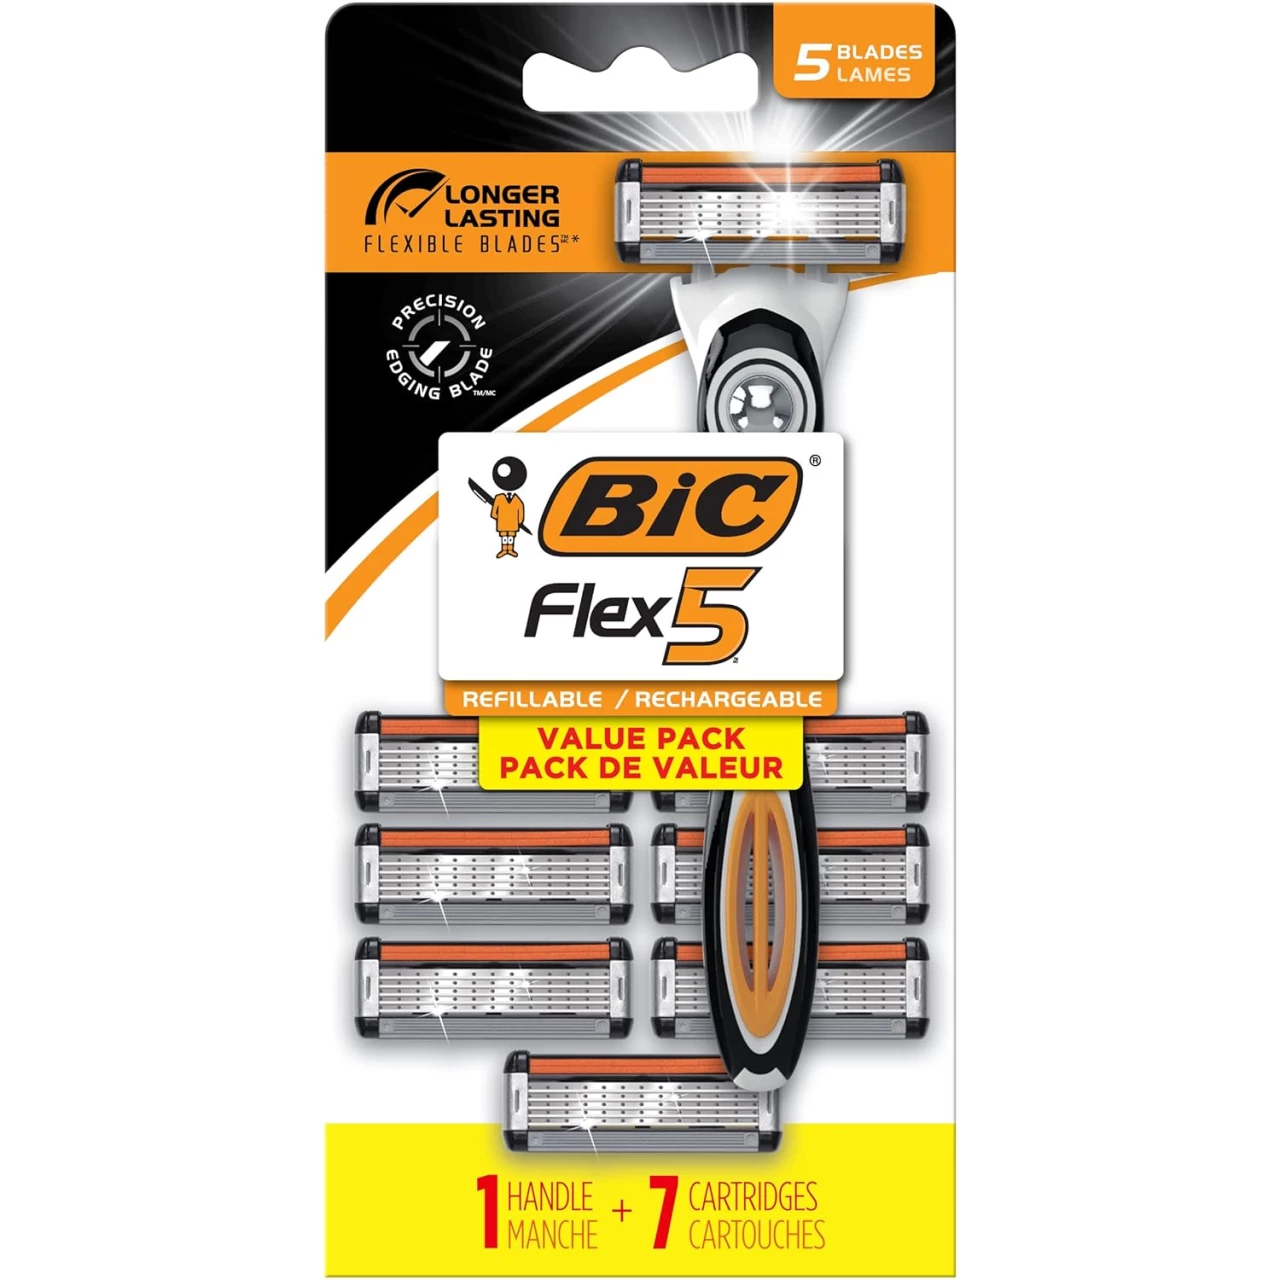 BIC Hybrid Flex 5 Titanium 5 Blade Disposable Razors for Men, 1 Handle and 7 Cartridges